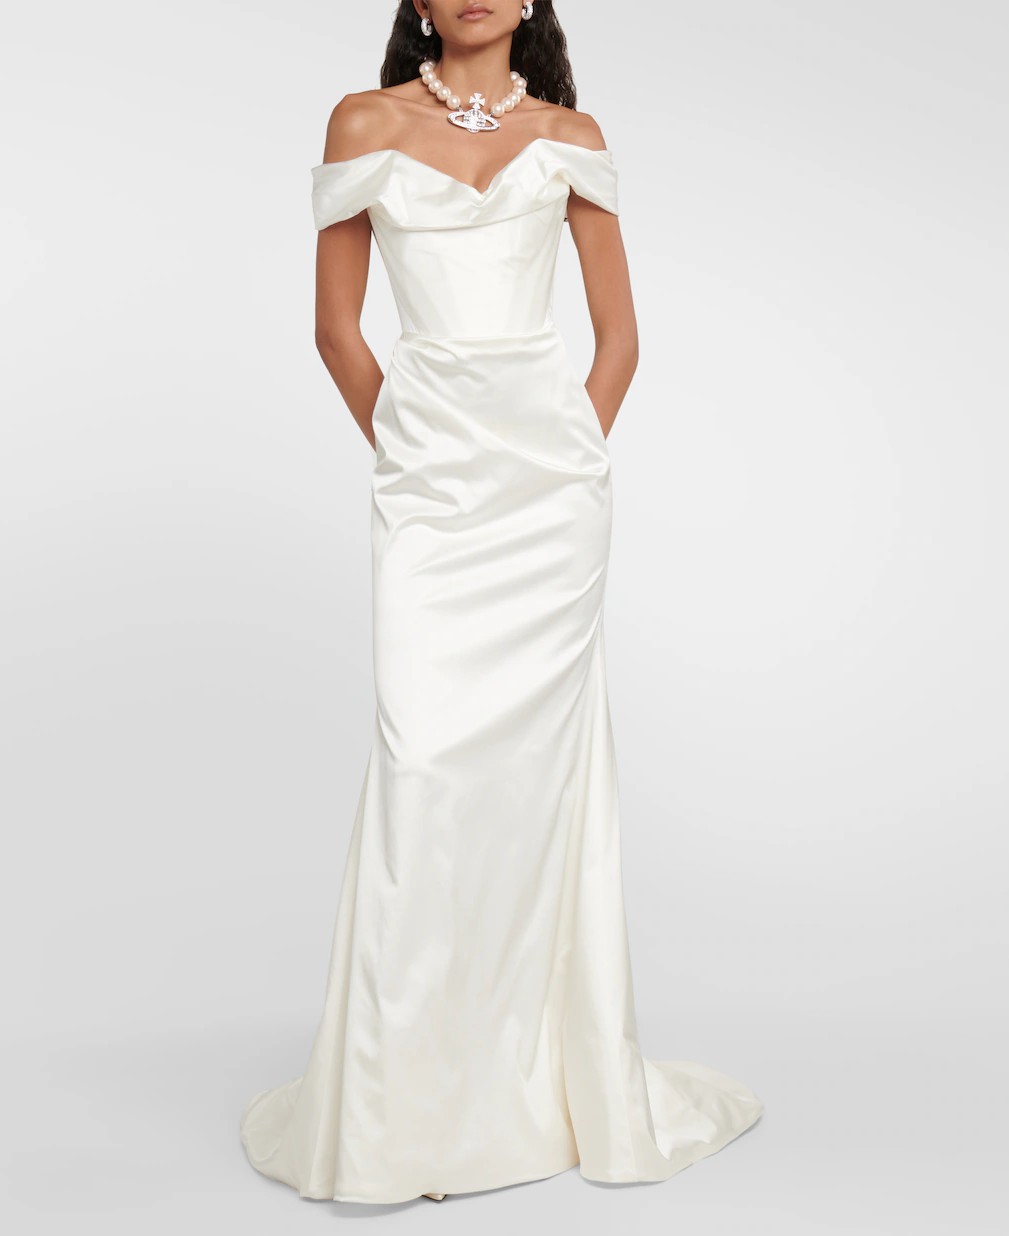 Vivienne Westwood Nova Cora Wedding Dress Save 9% - Stillwhite